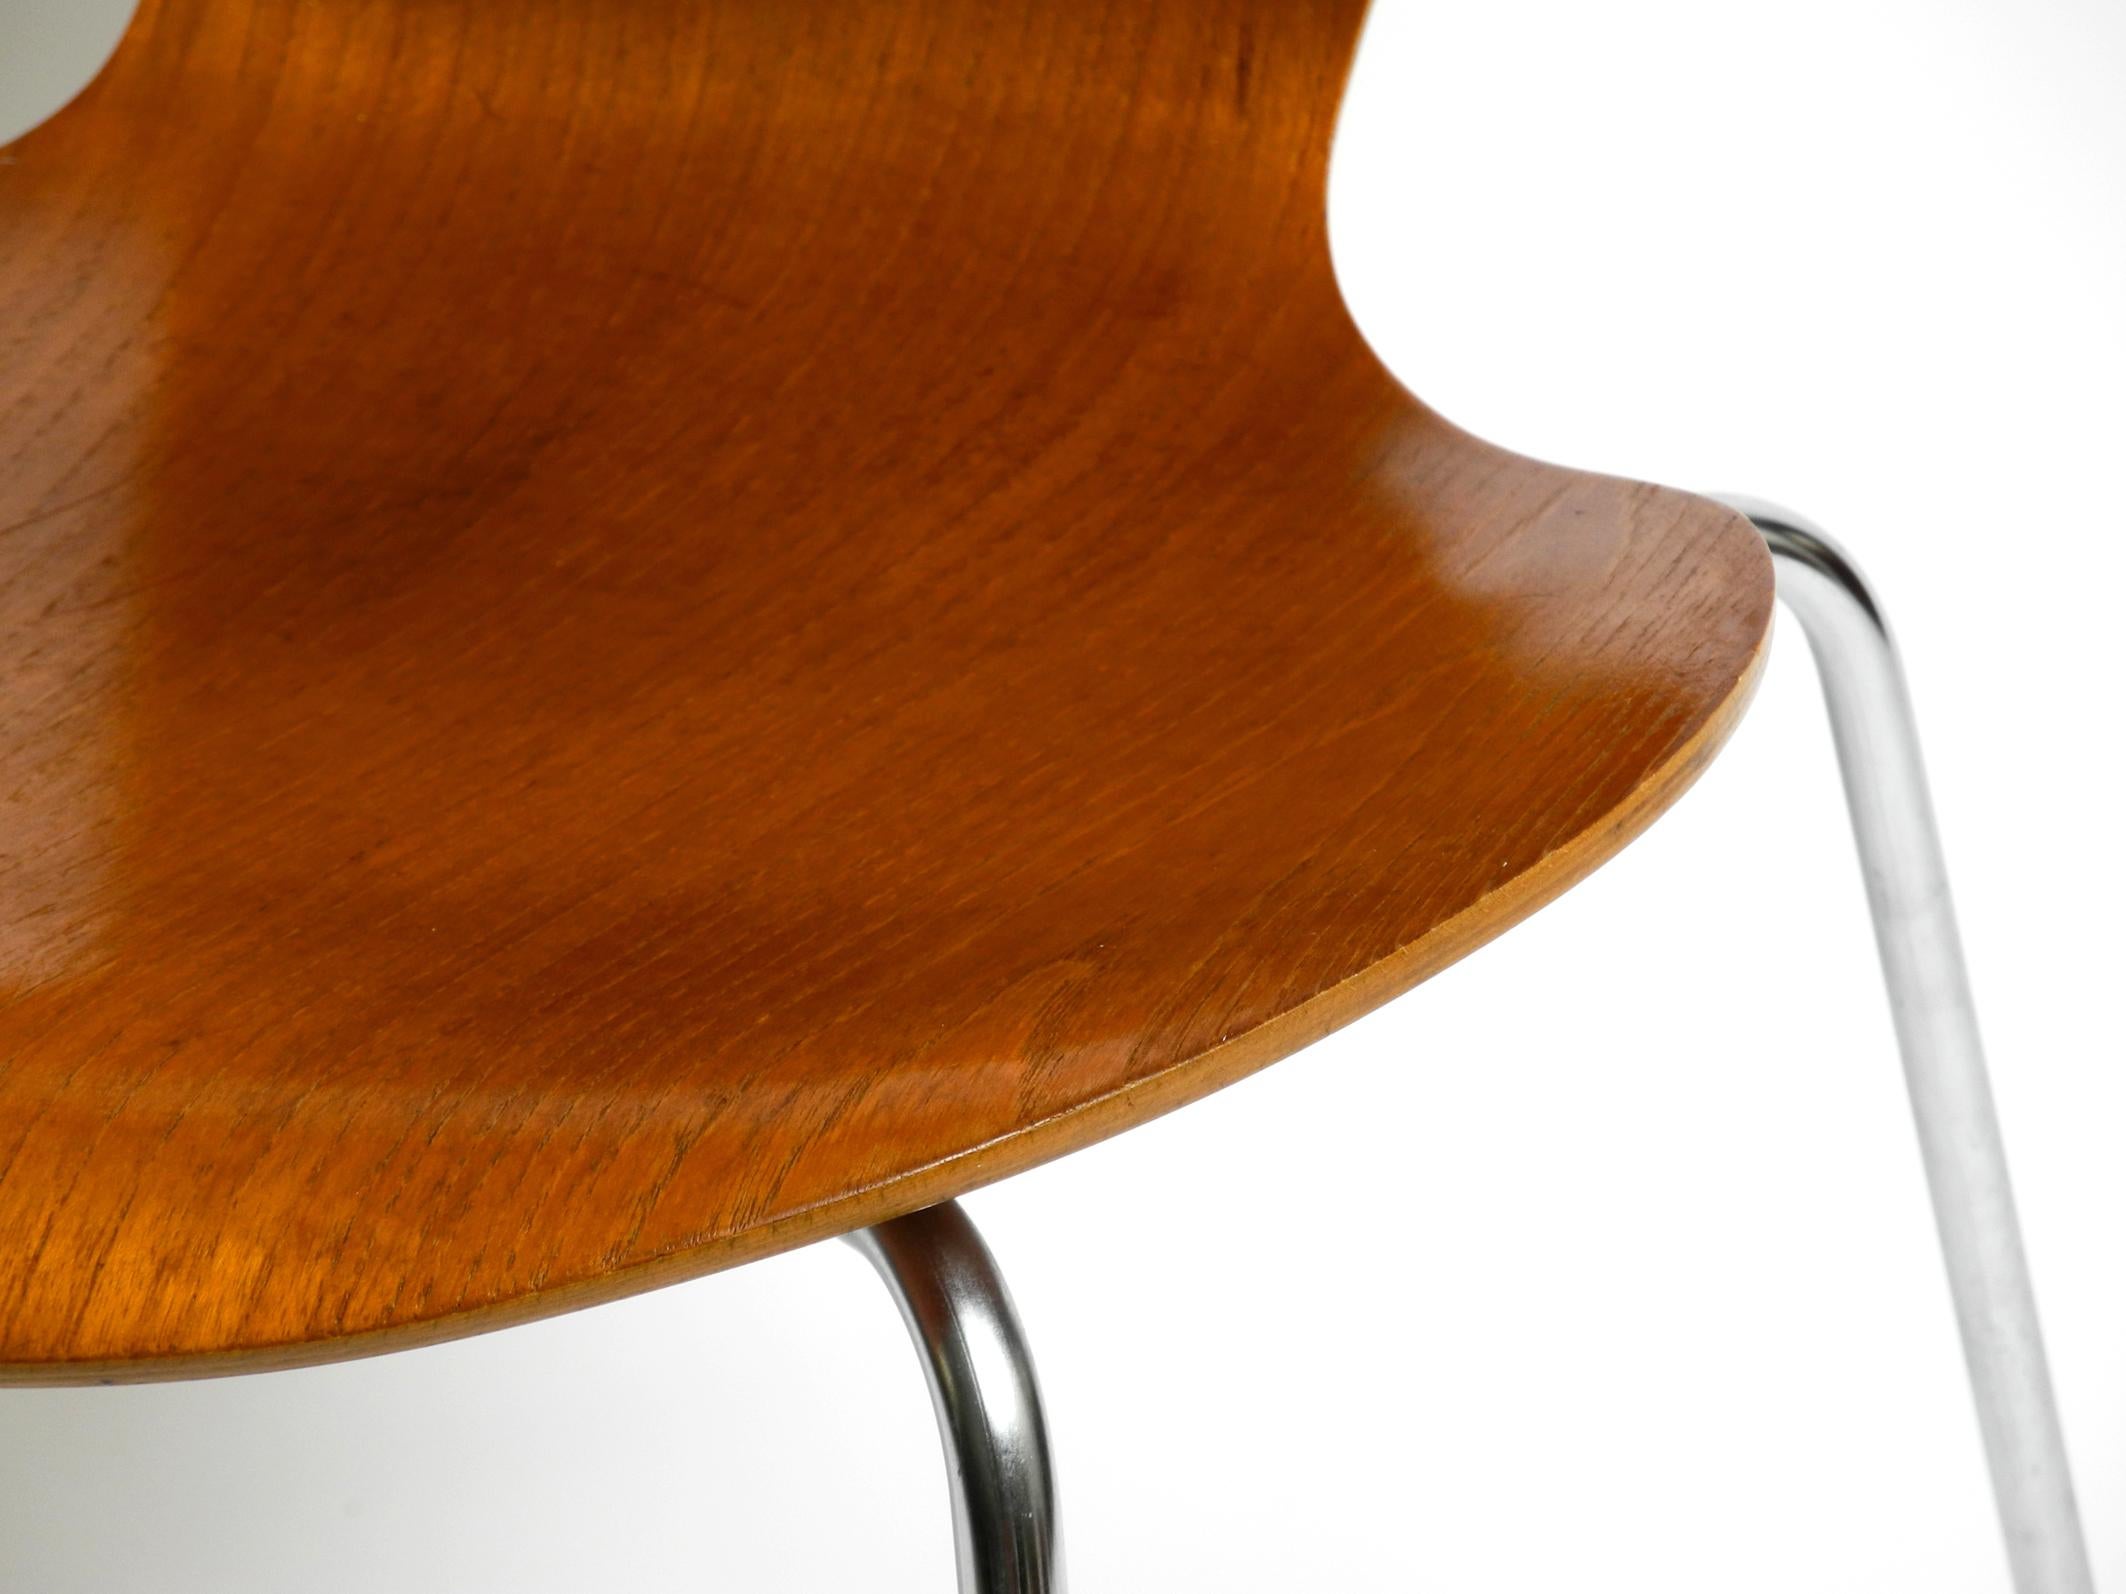 Metal Original Arne Jacobsen Teak Chair from 1972 Mod. 3107